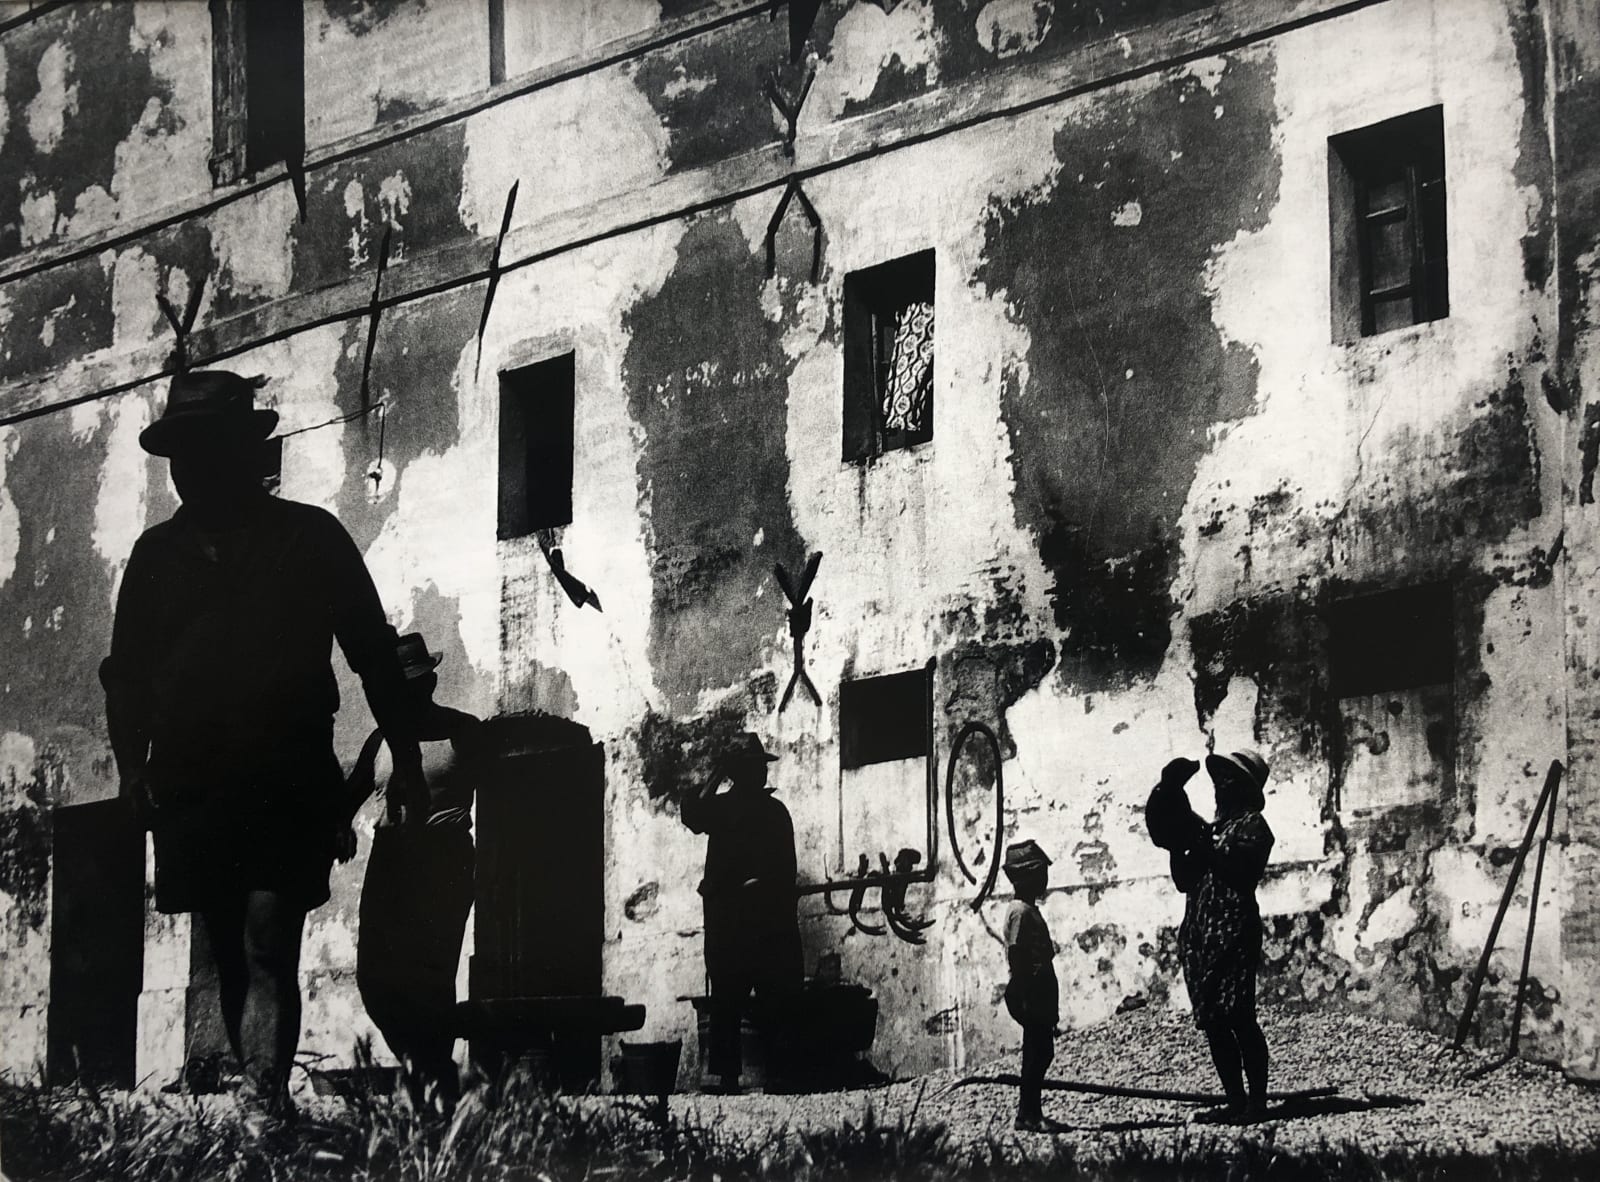 Mario Giacomelli, La Buona Terra 208 (C-B wall), 1964-65